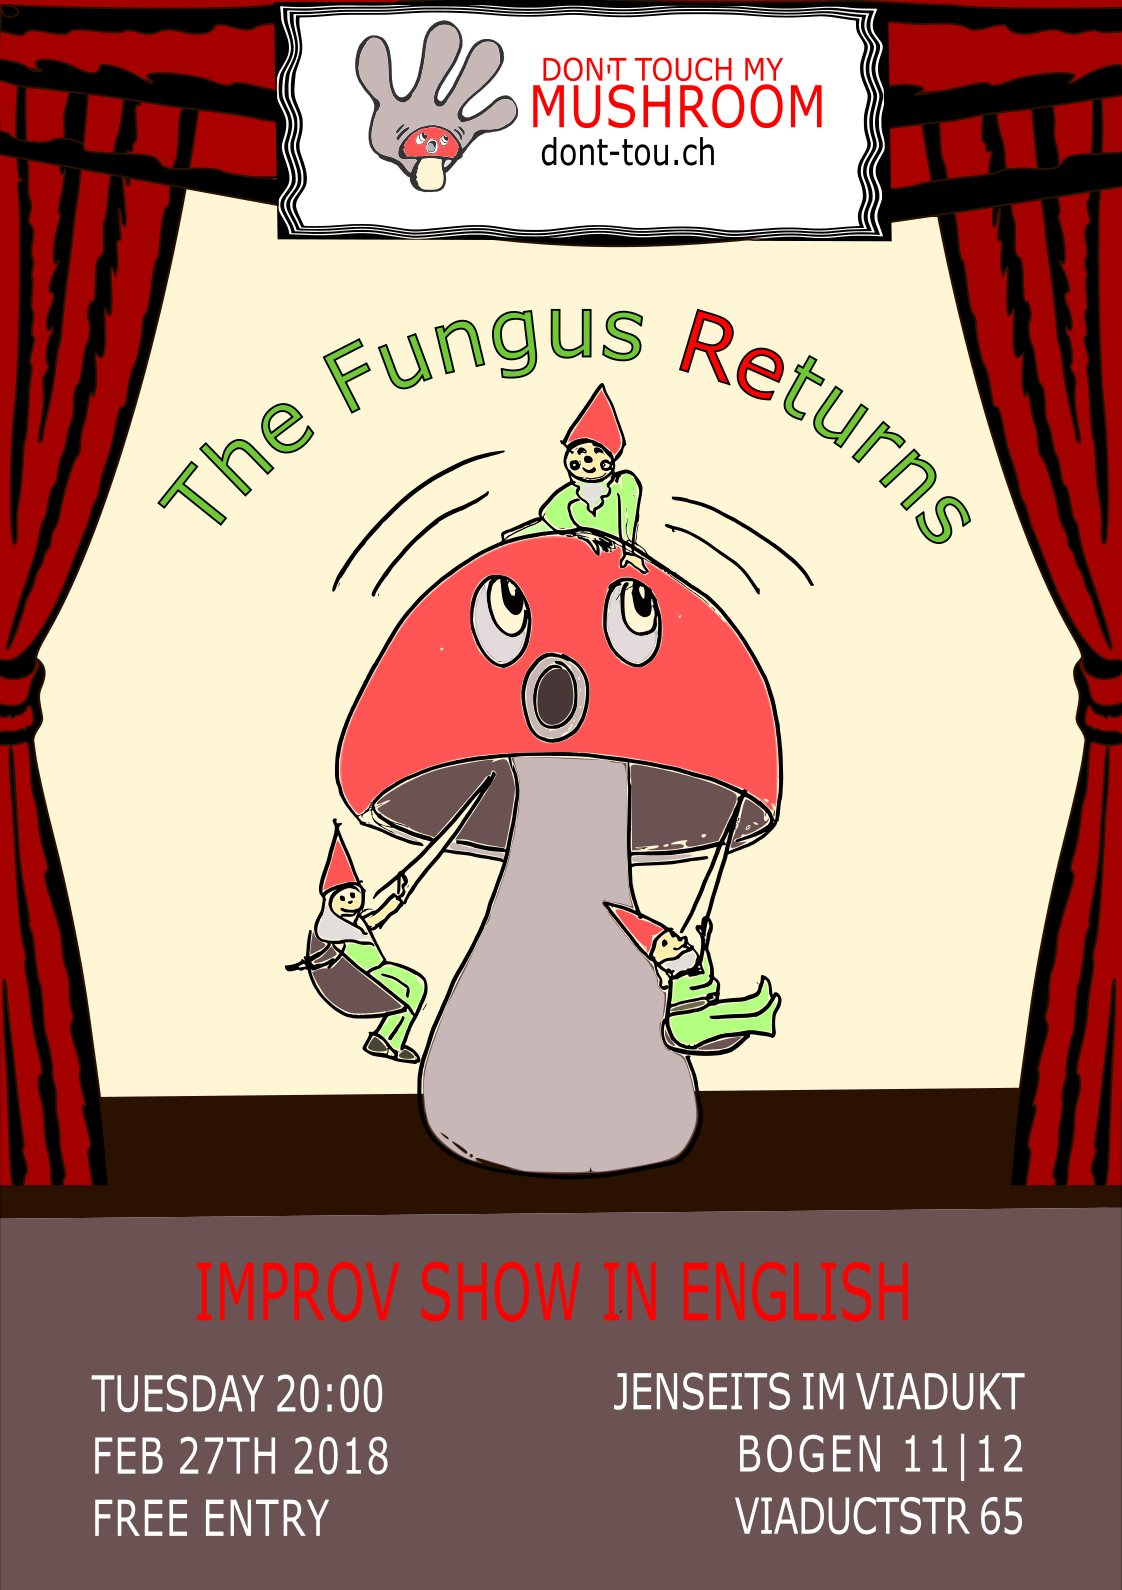 The fungus returns! image